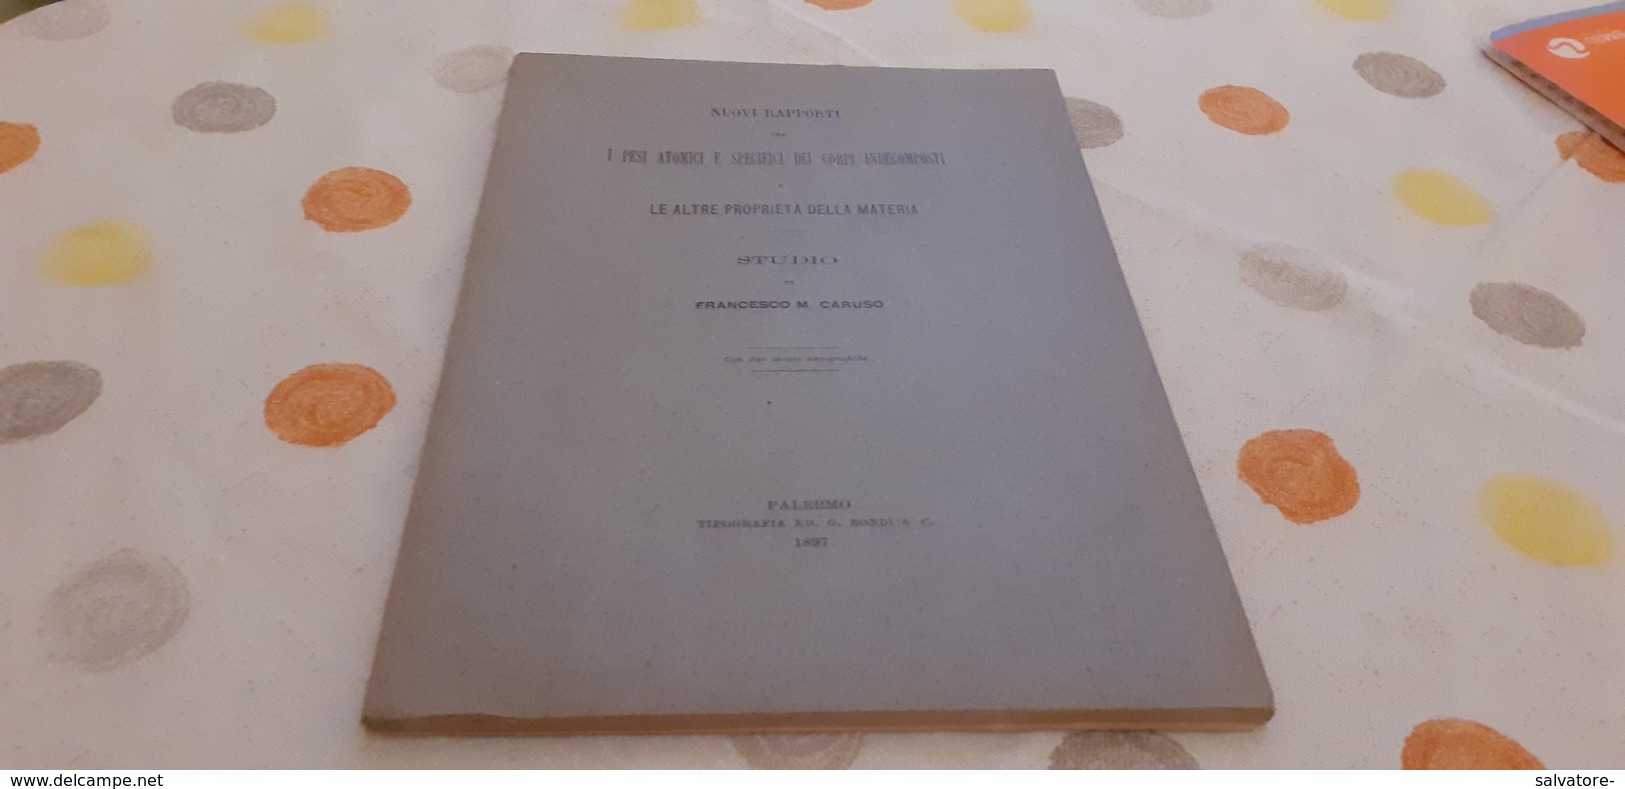 NUOVI RAPPORTI - I PESI ATOMICI E SPECIFICI DEI CORPI INDECOMPOSTI- F. CARUSO 1897 - Mathématiques Et Physique